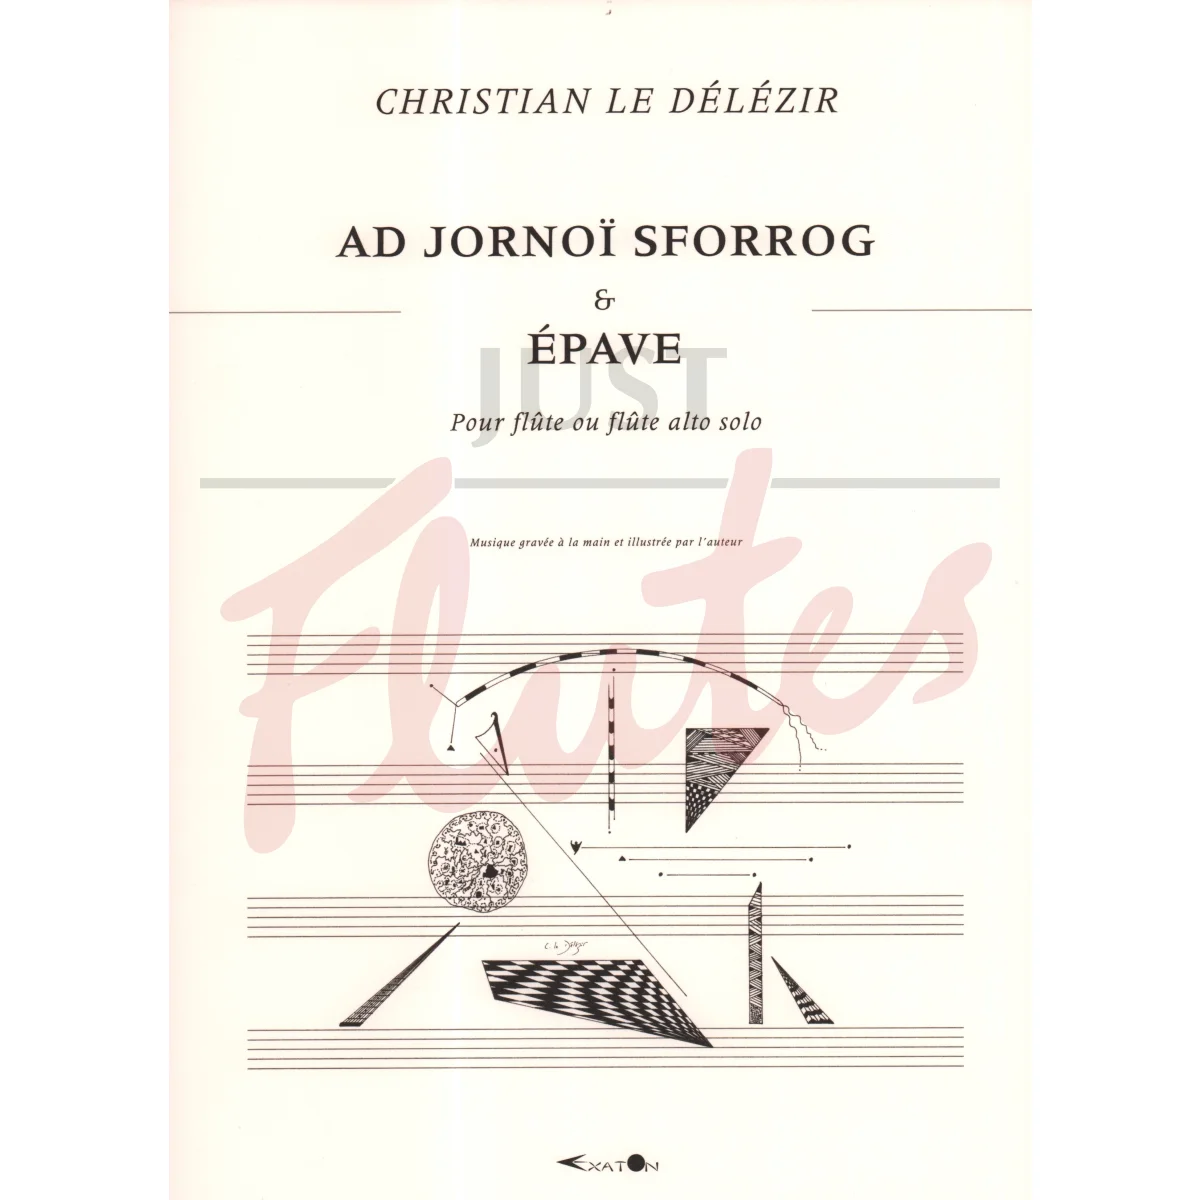 Ad Jornoi Sforrog and Epave - Art Edition